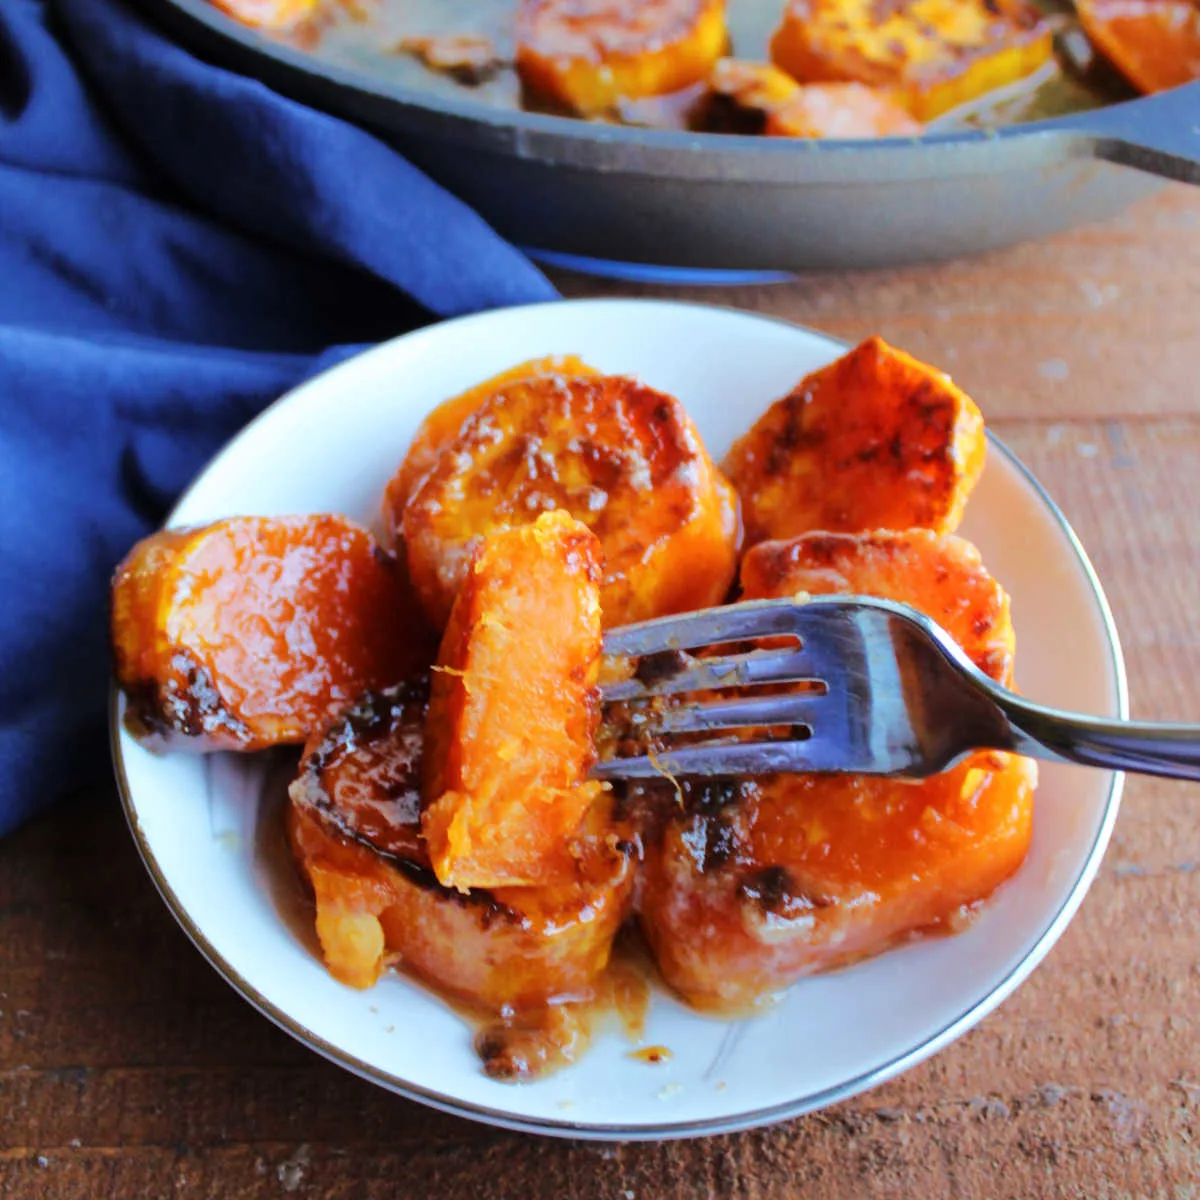 Bite of skillet sweet potato of fork showing soft orange interior and sticky caramelized exterior.